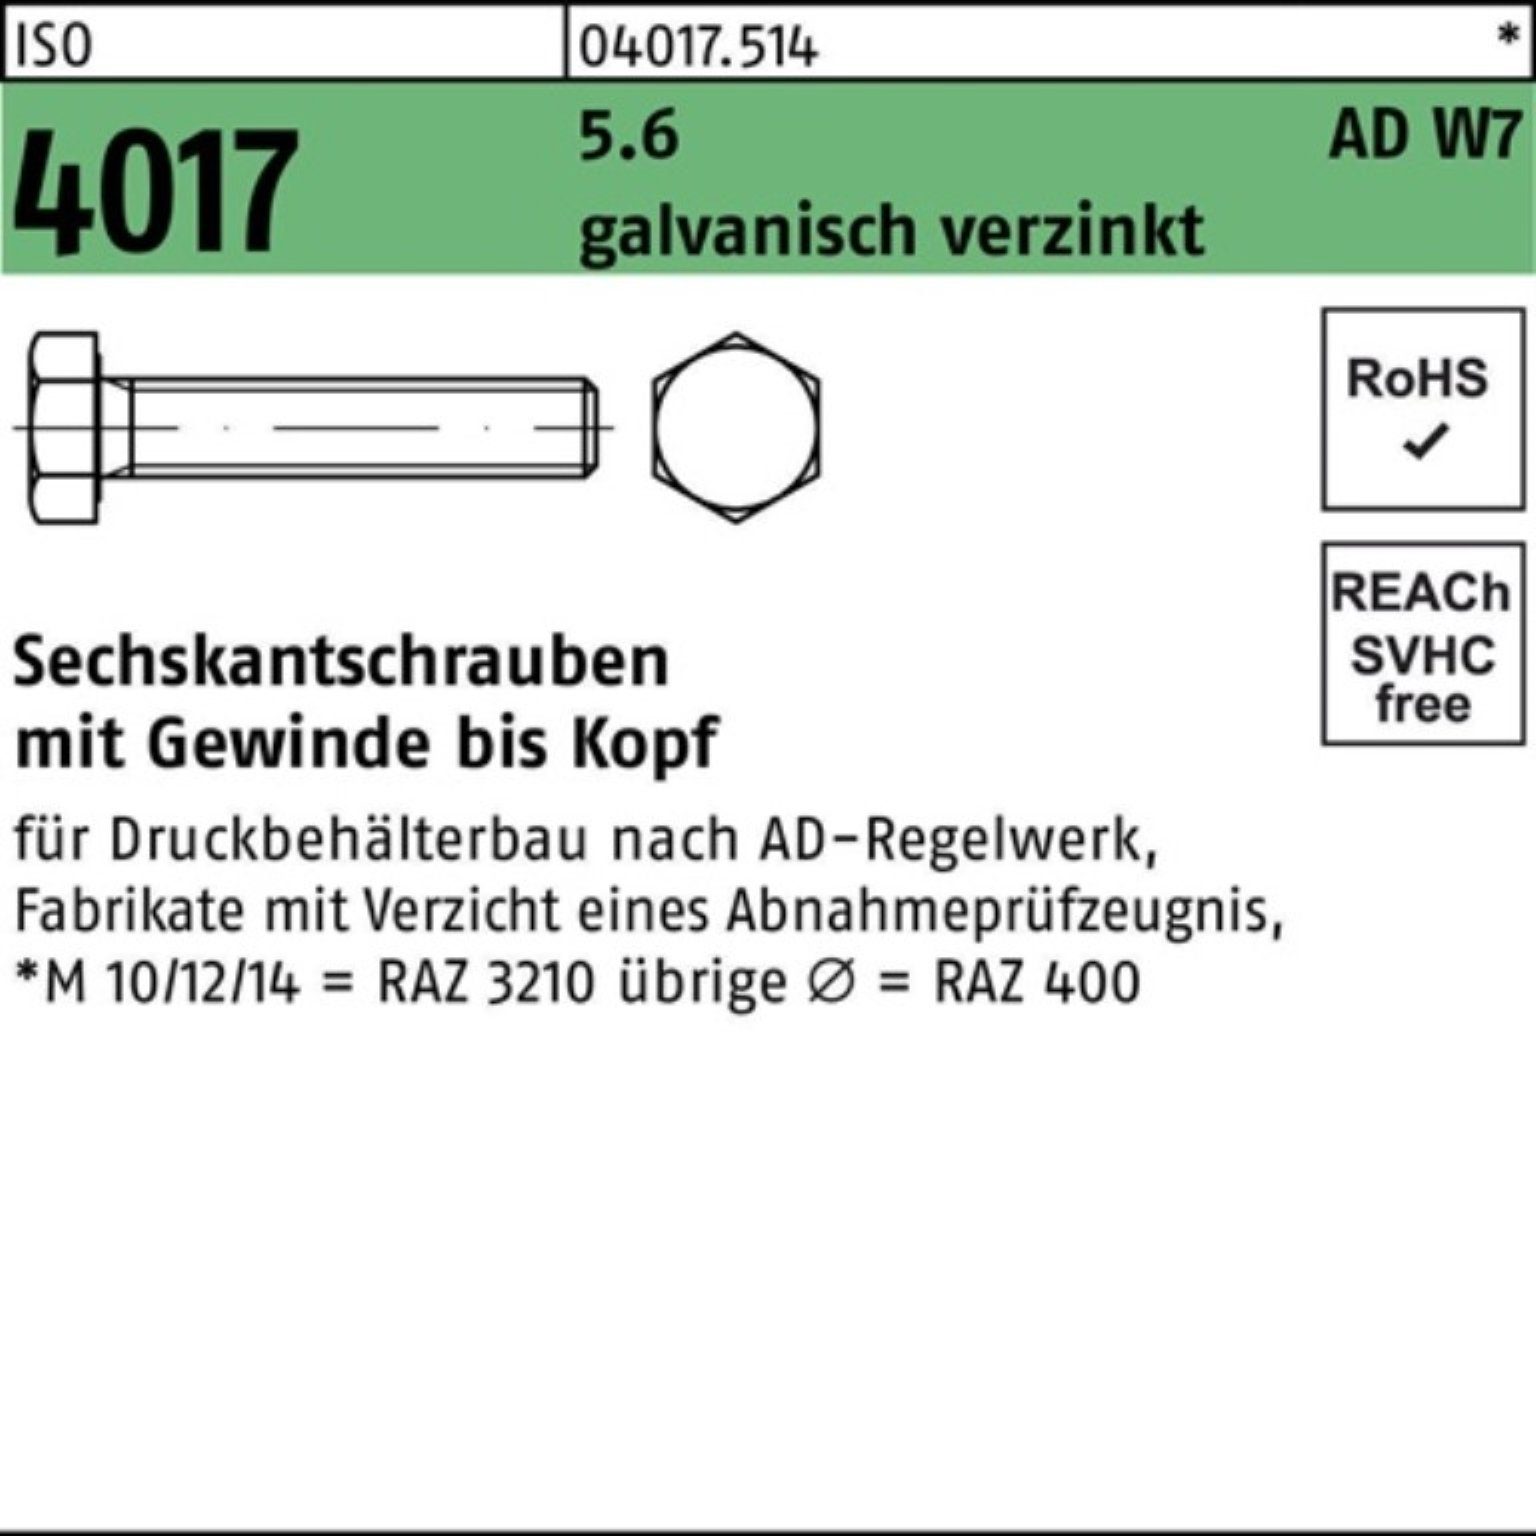 Sechskantschraube W7 AD galv.verz. VG ISO 80 Sechskantschraube Bufab M30x 5.6 100er Pack 4017